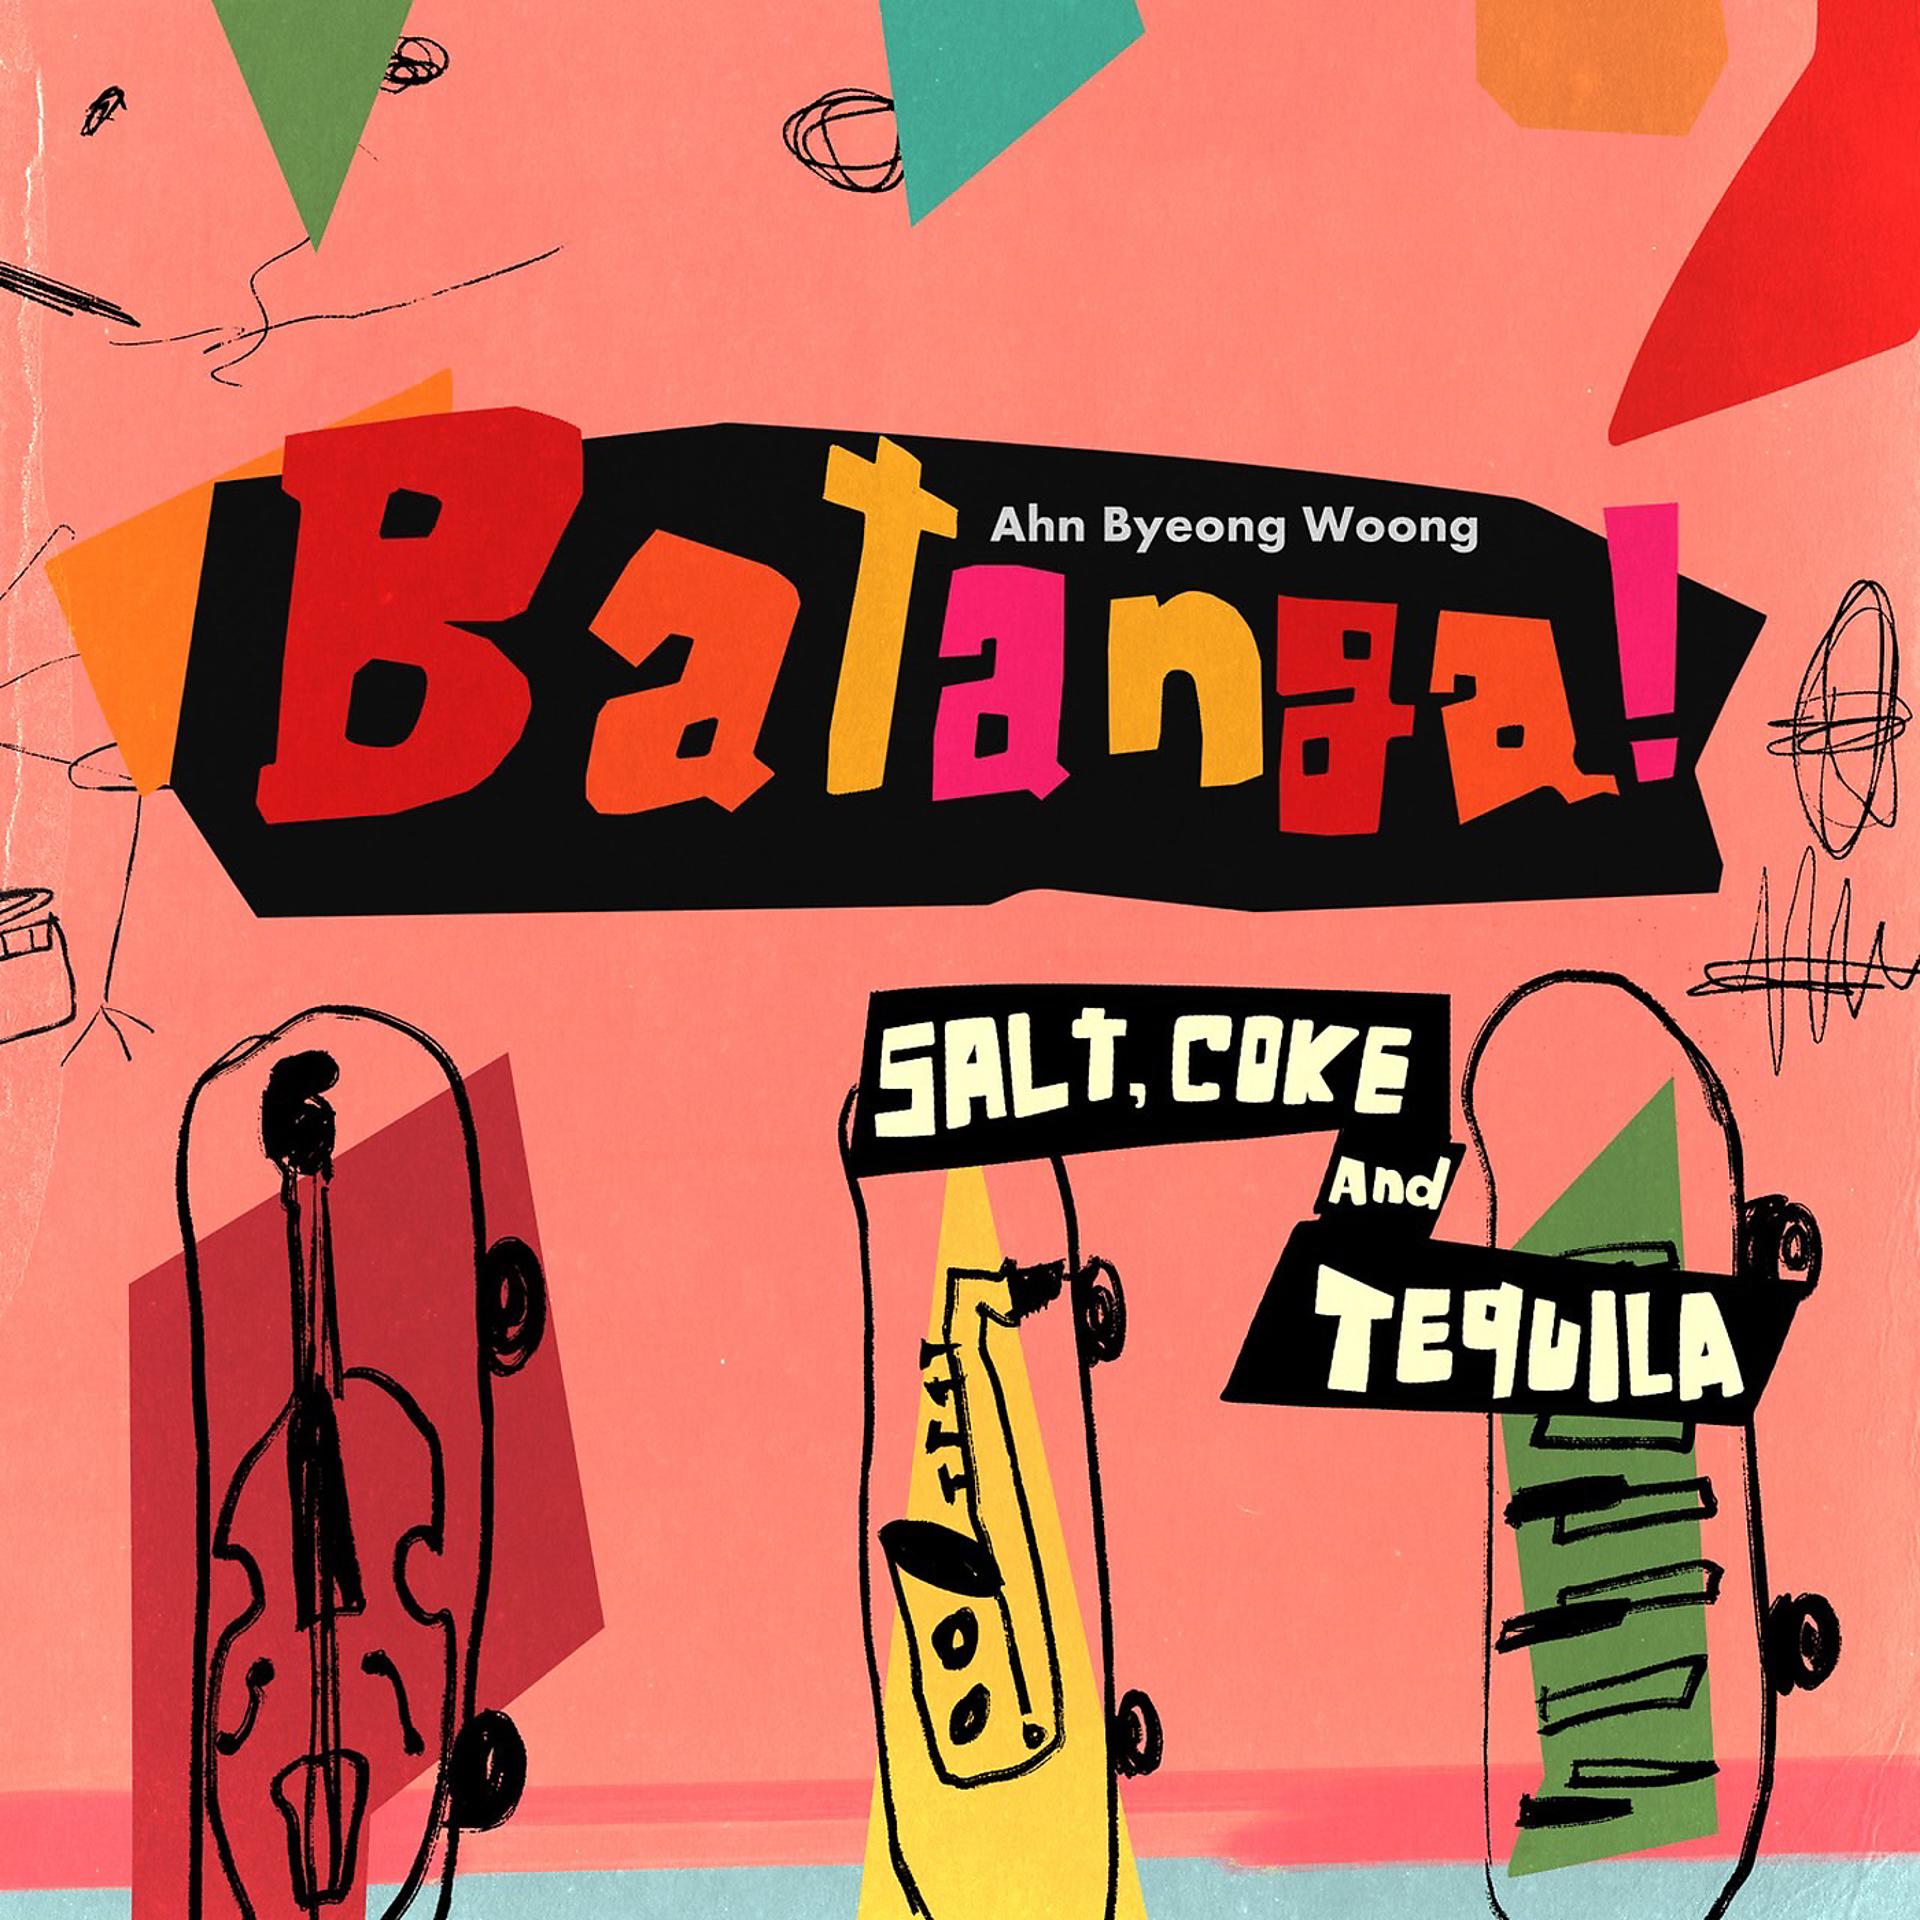 Постер альбома Batanga! (S. alt’ C. oke A .nd T. equila)